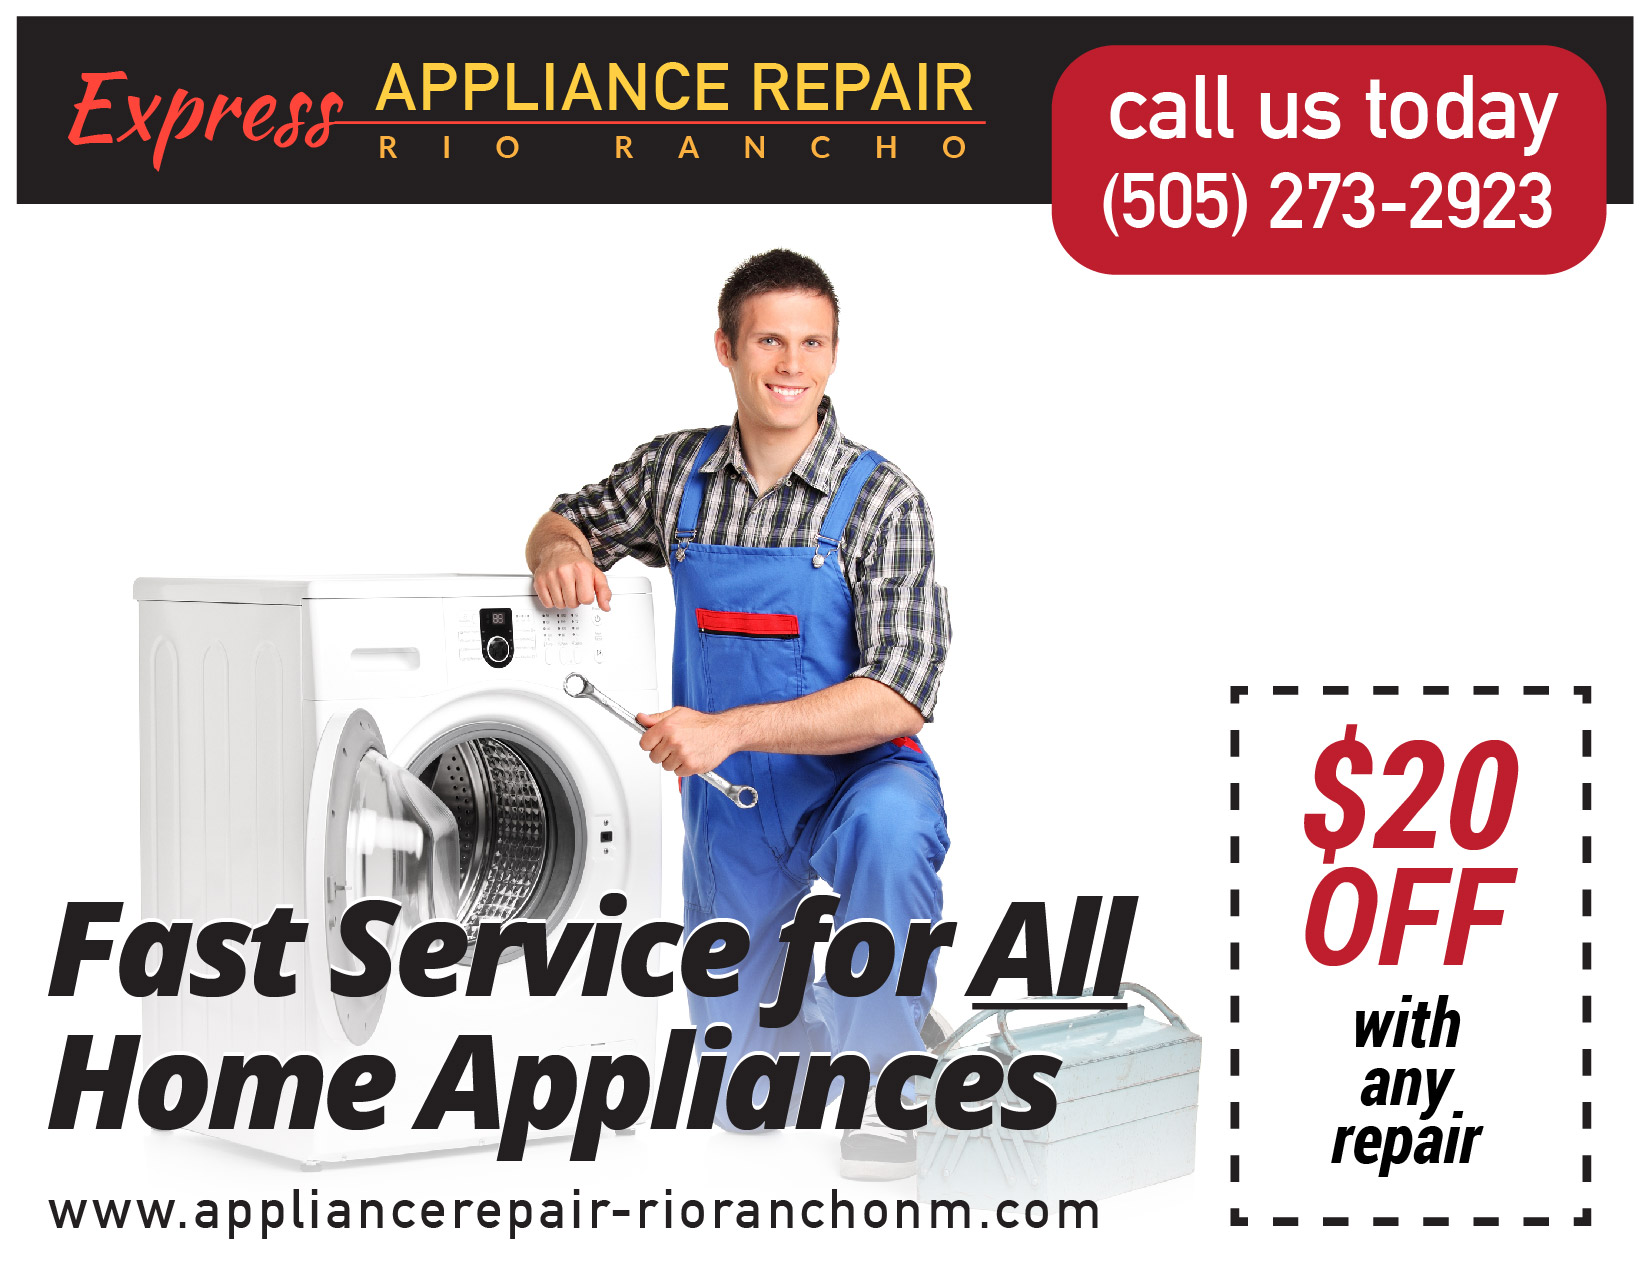 Express Appliance Repair of Rio Rancho